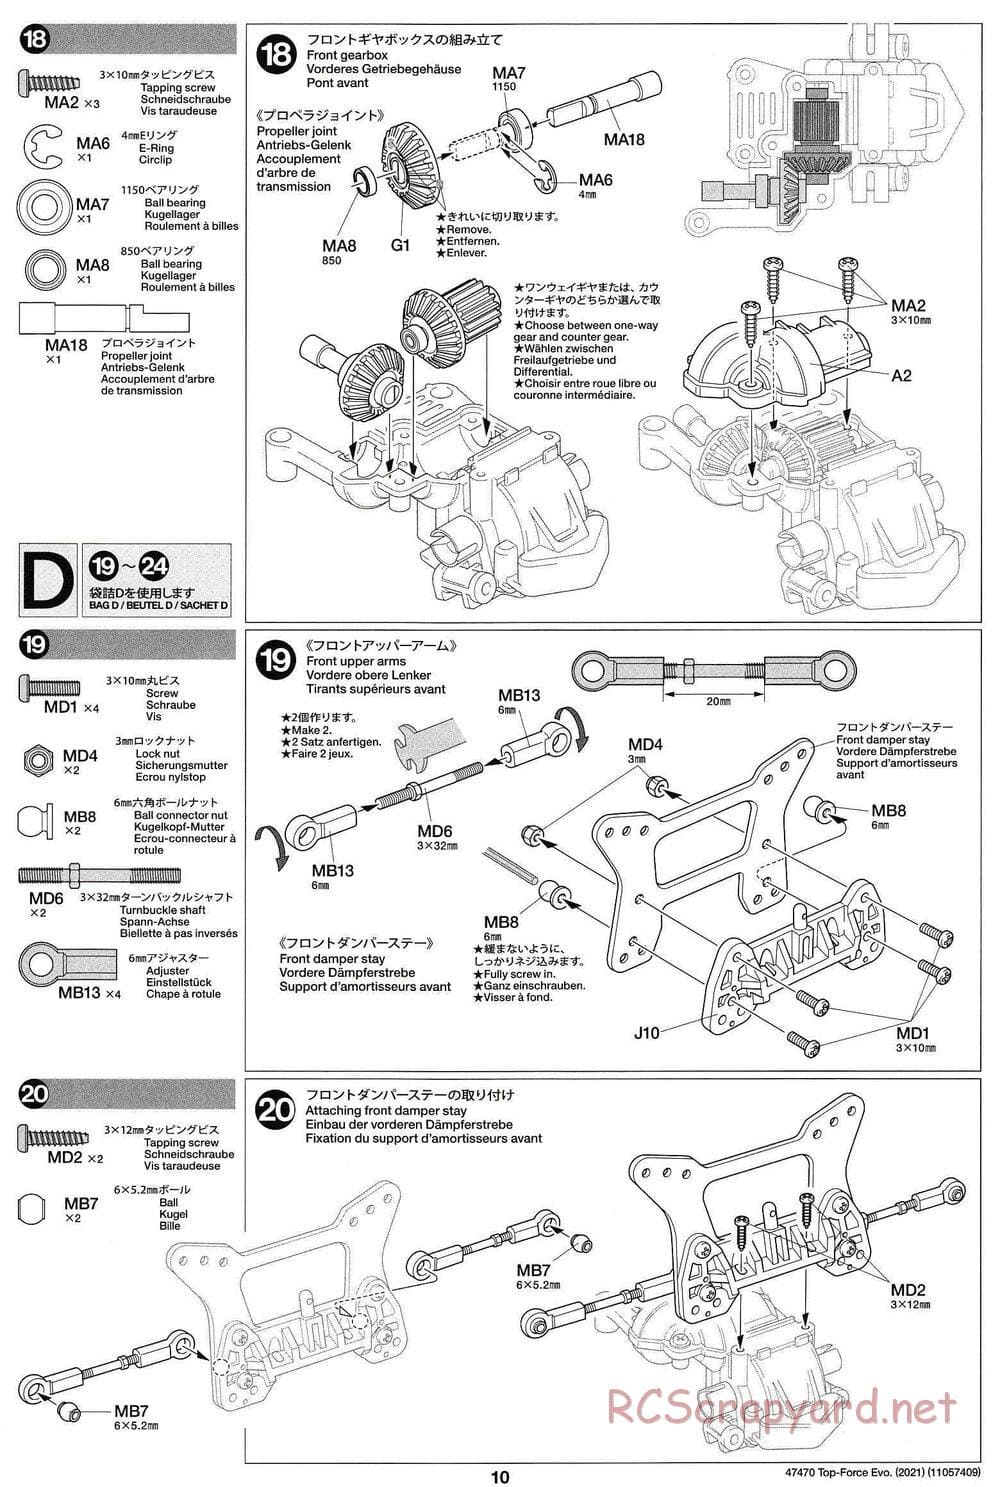 Tamiya - Top Force Evo 2021 - DF-01 Chassis - Manual - Page 10